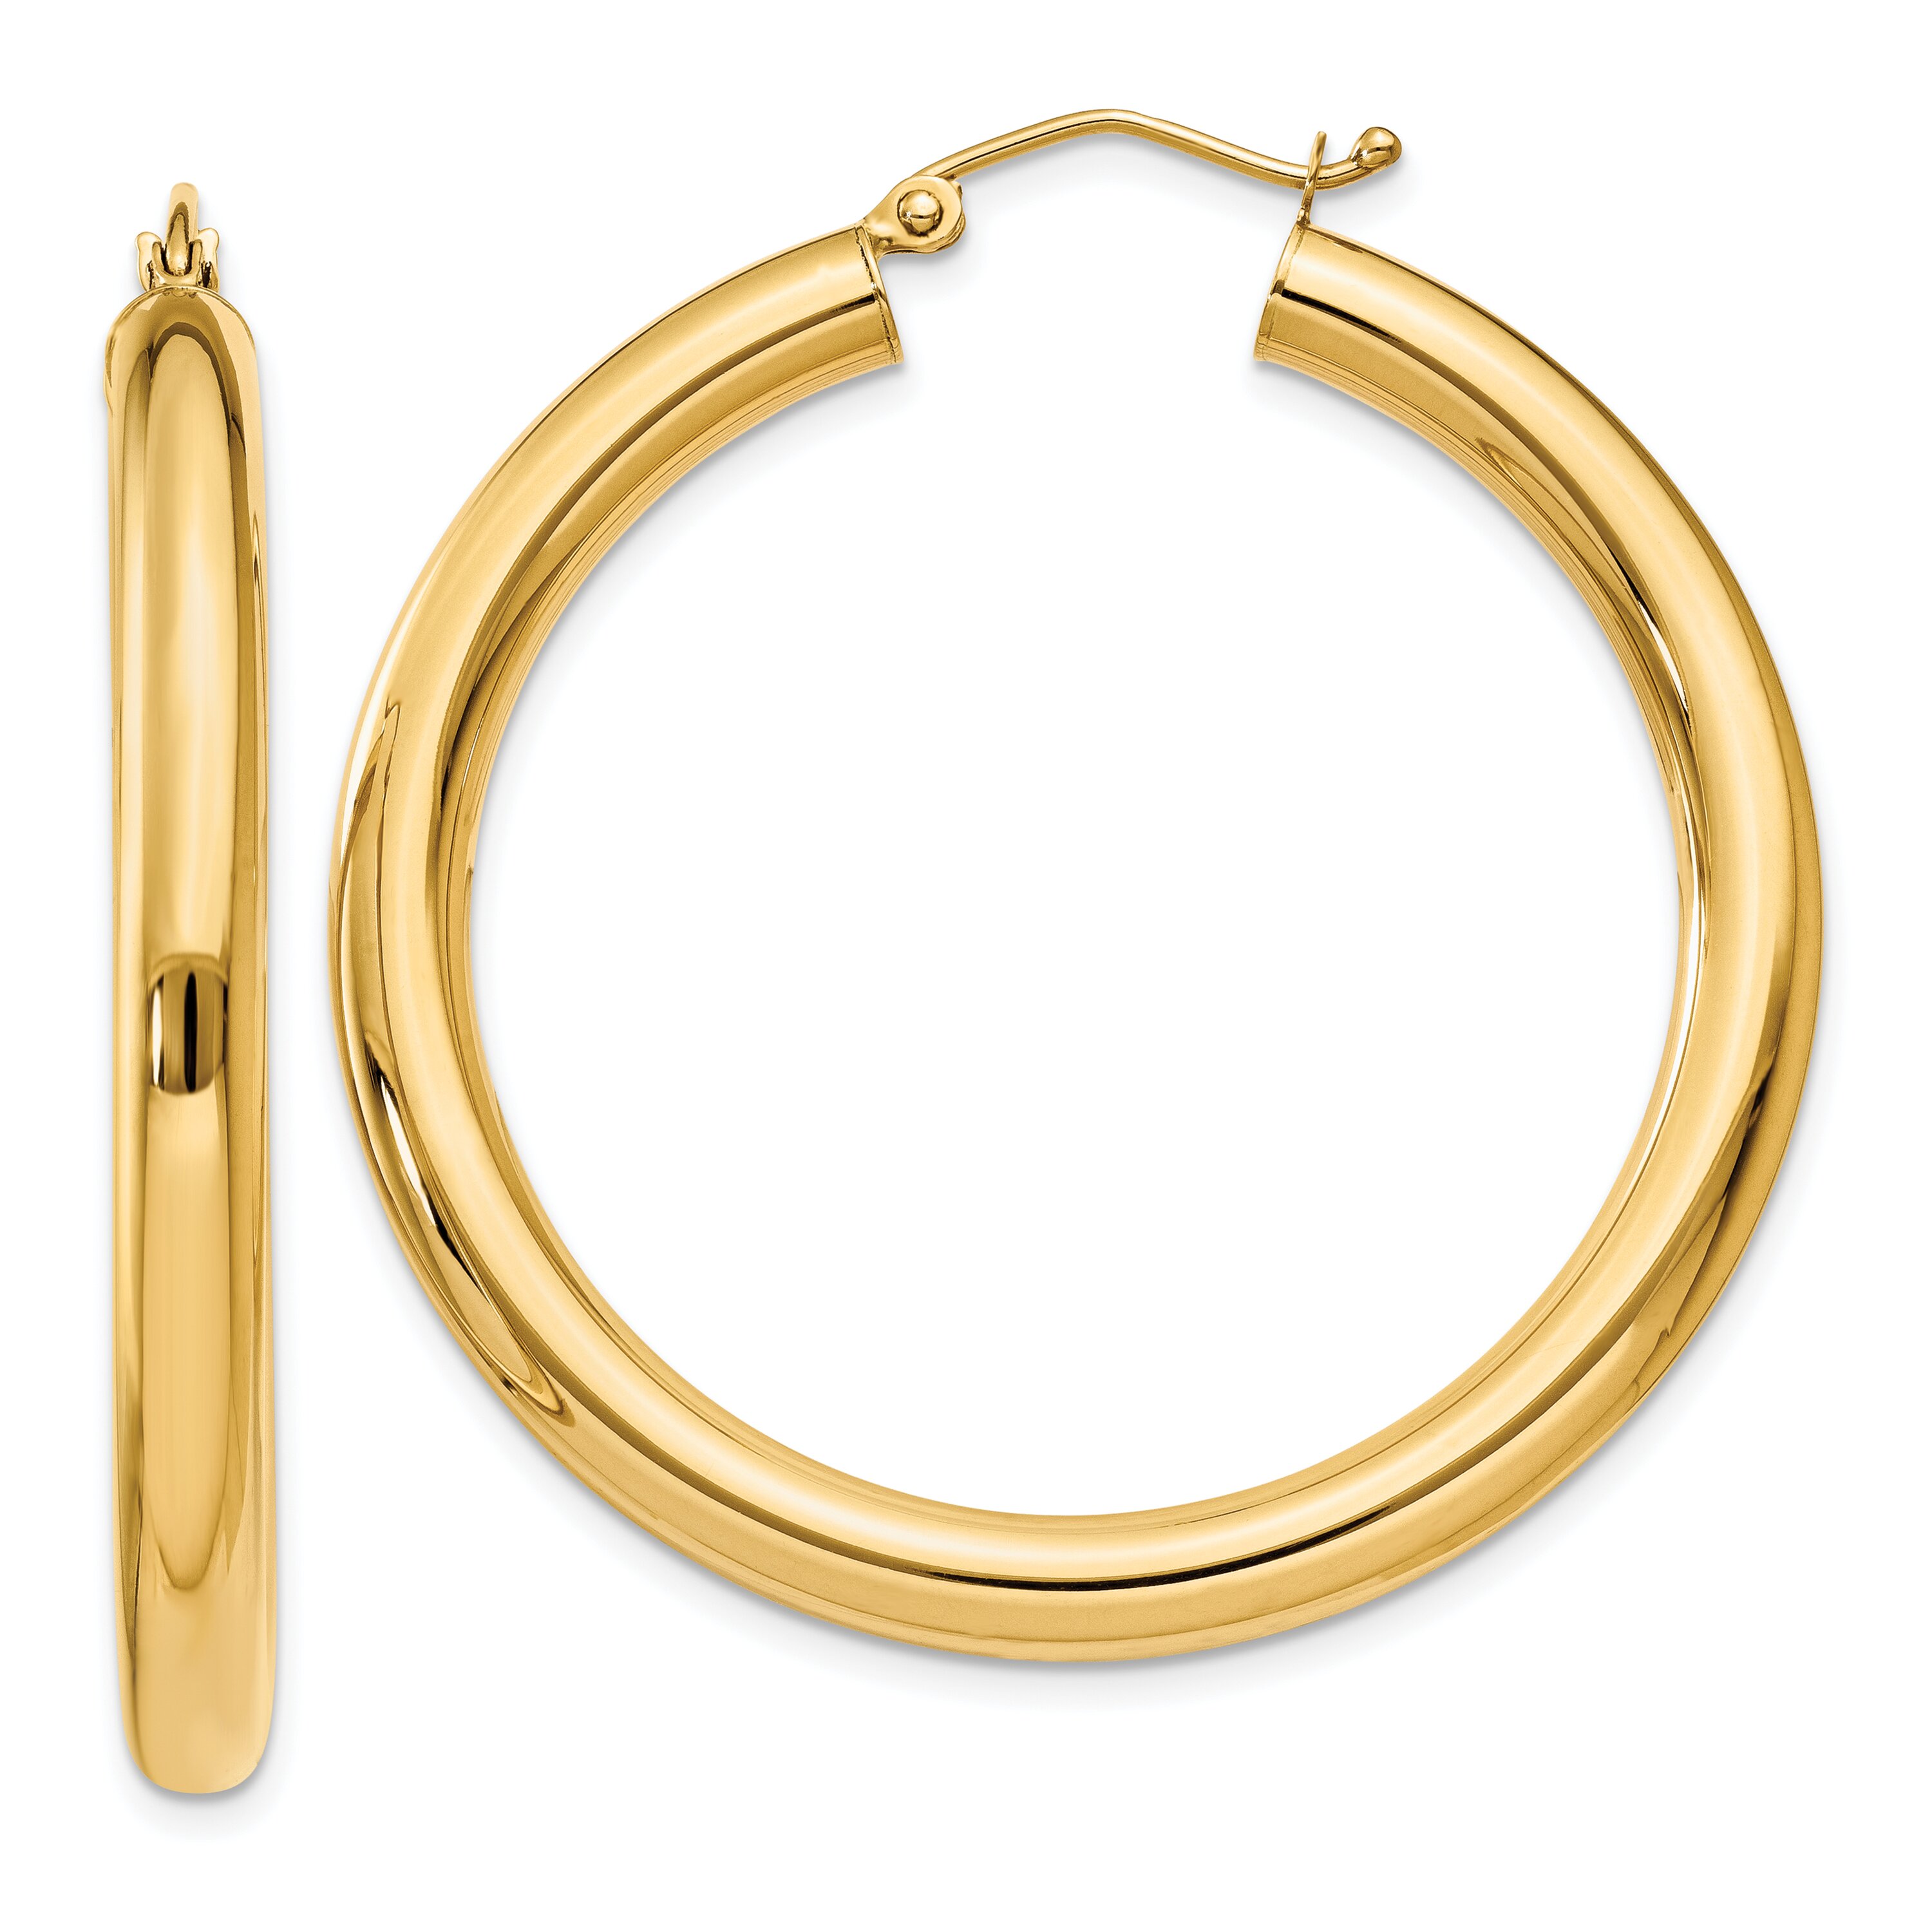 Findingking 14K Yellow Gold Tube Hoop Earrings Polished Jewelry